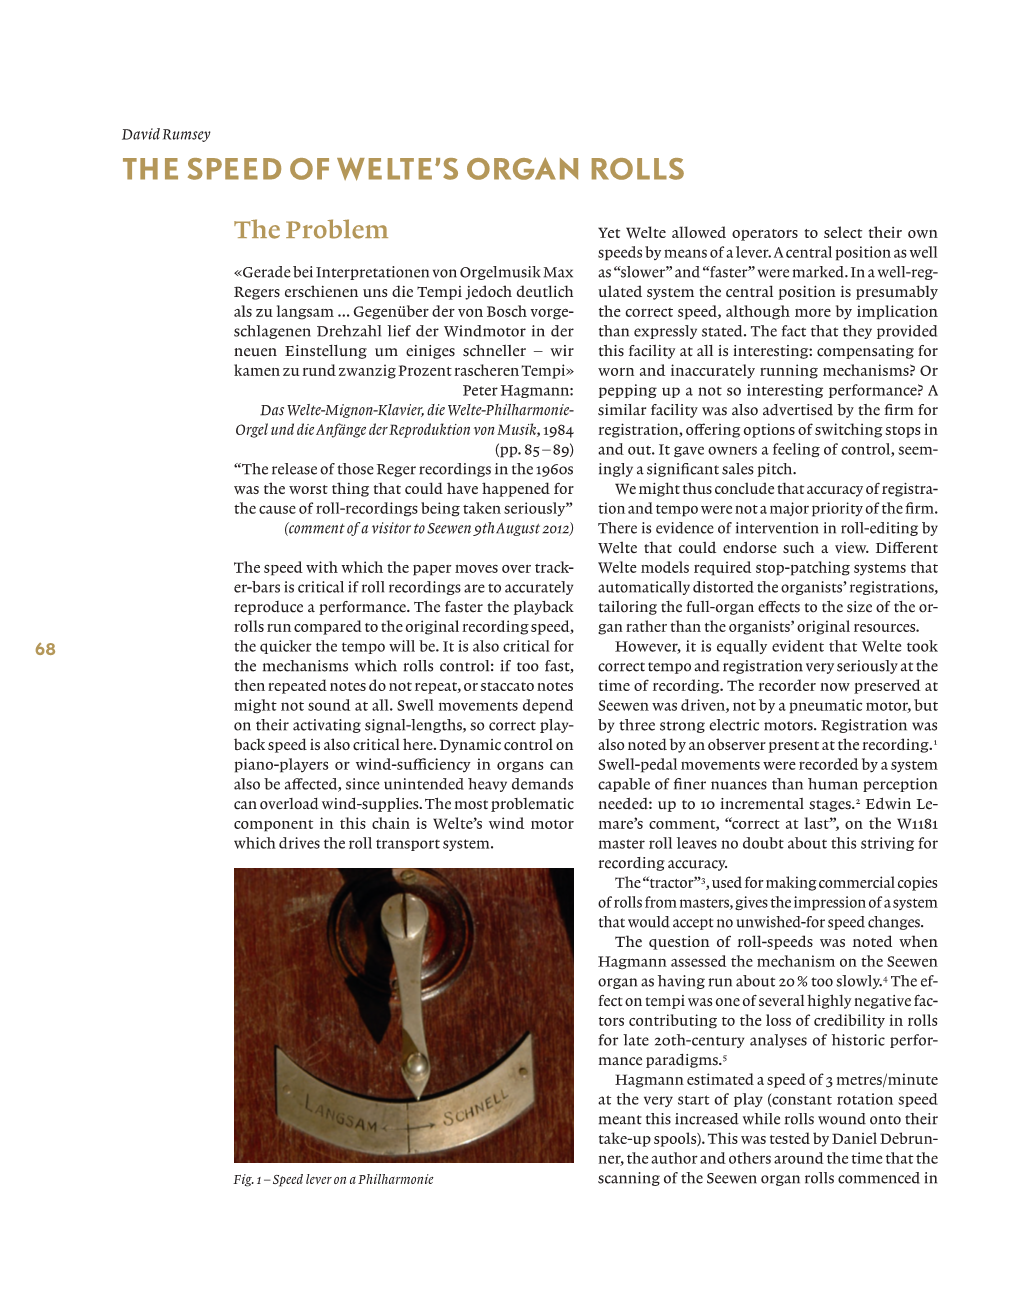 The Speed of Welte's Organ Rolls